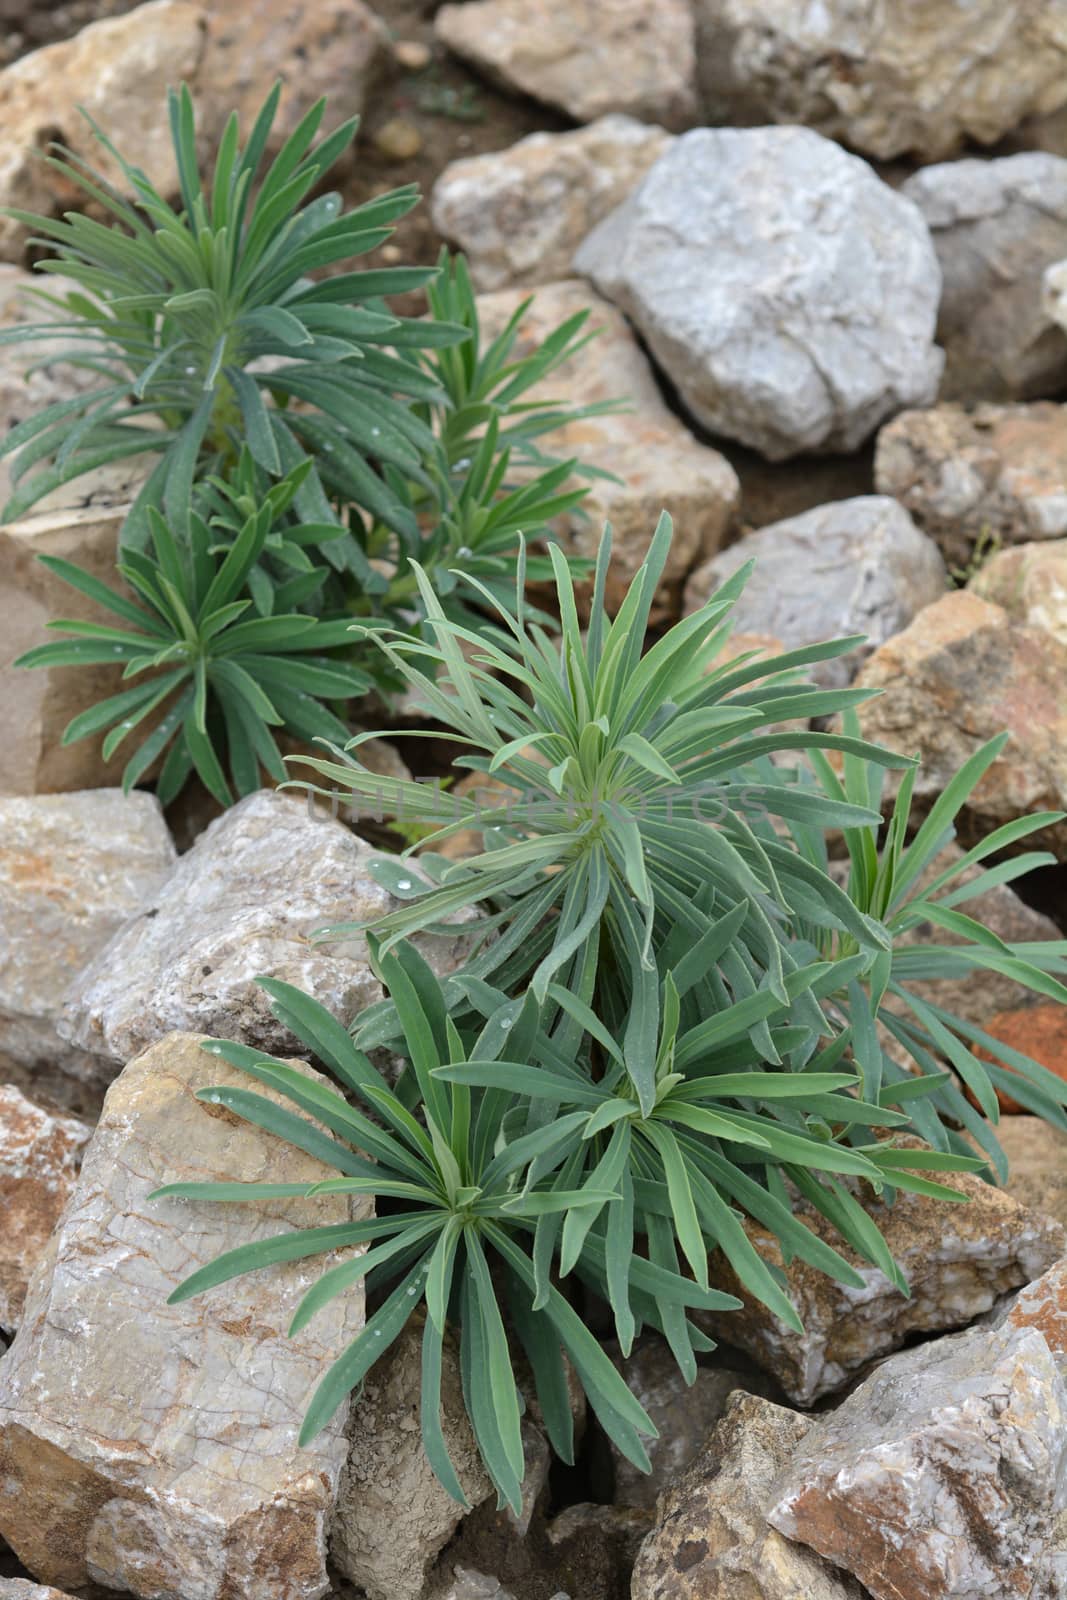 Wulfens spurge - Latin name - Euphorbia characias subsp. wulfenii